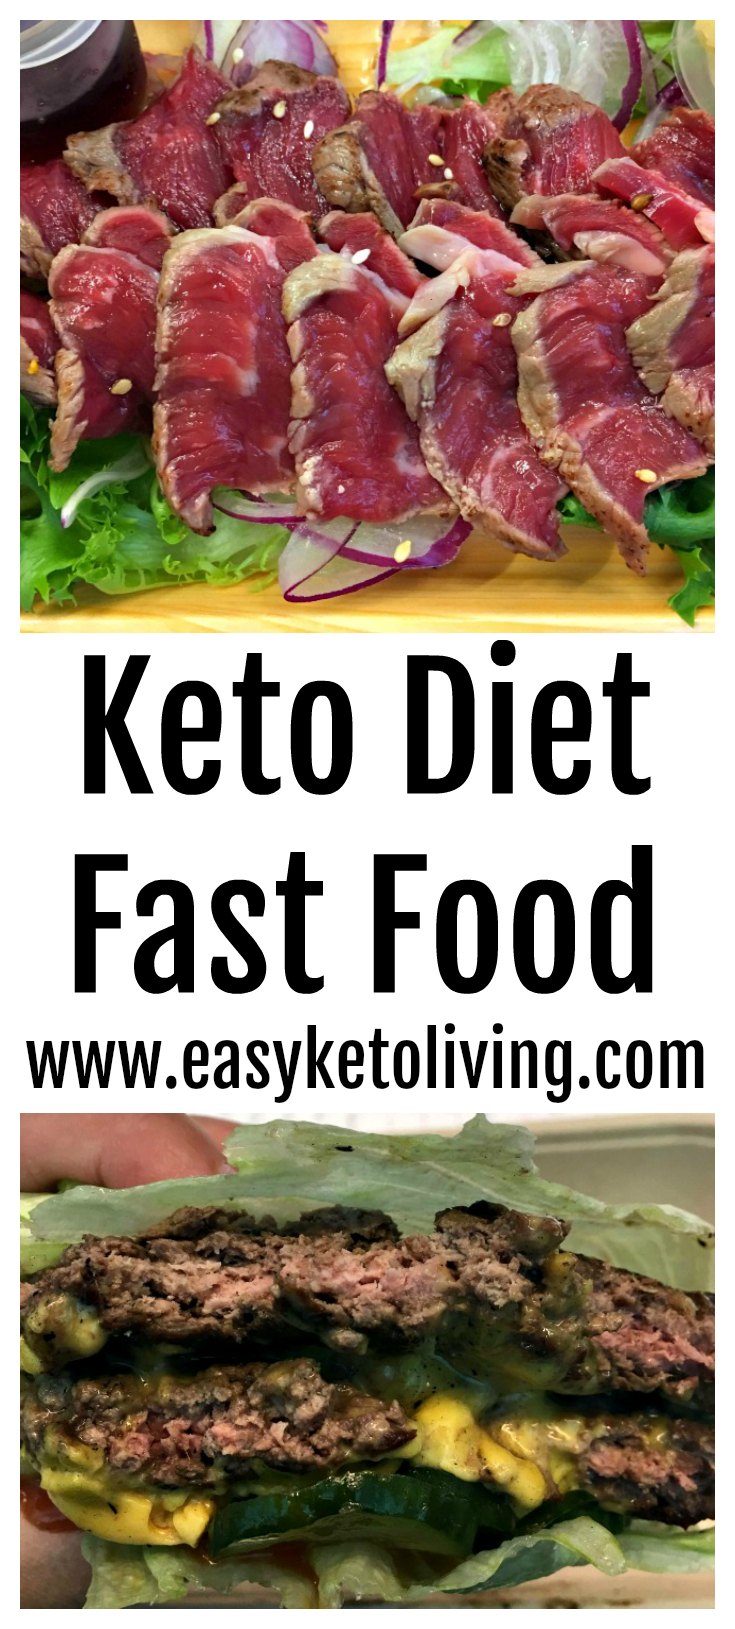 5 Keto Fast Food Options - Low Carb & Ketogenic Fast Food Ideas